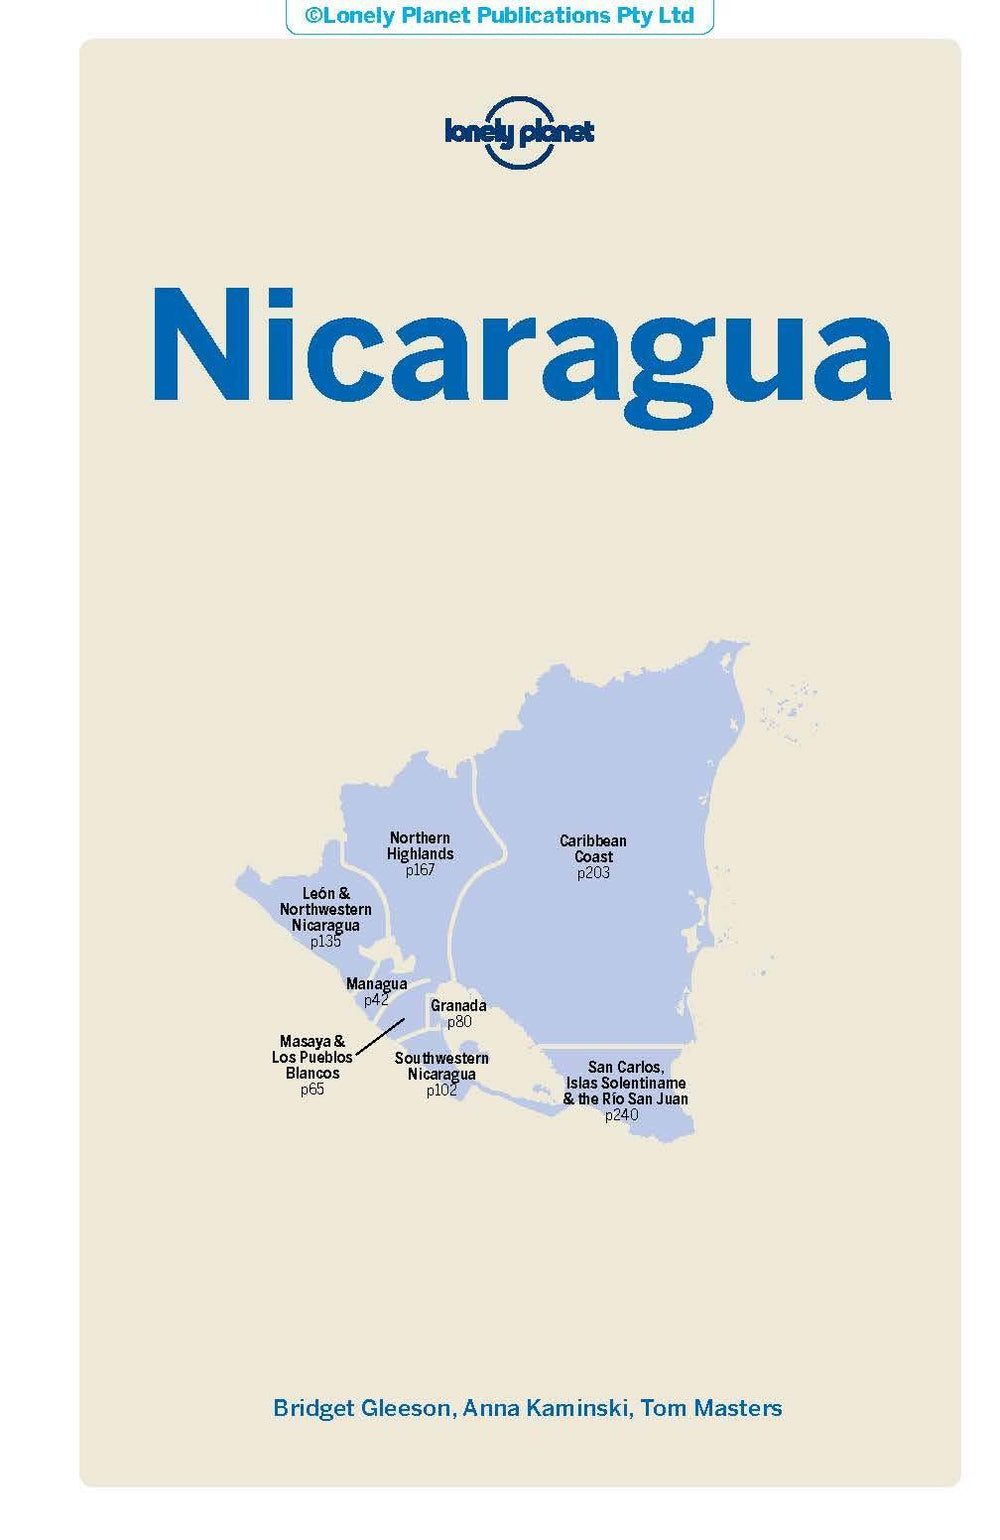 Guide de voyage (en anglais) - Nicaragua | Lonely Planet guide de voyage Lonely Planet 